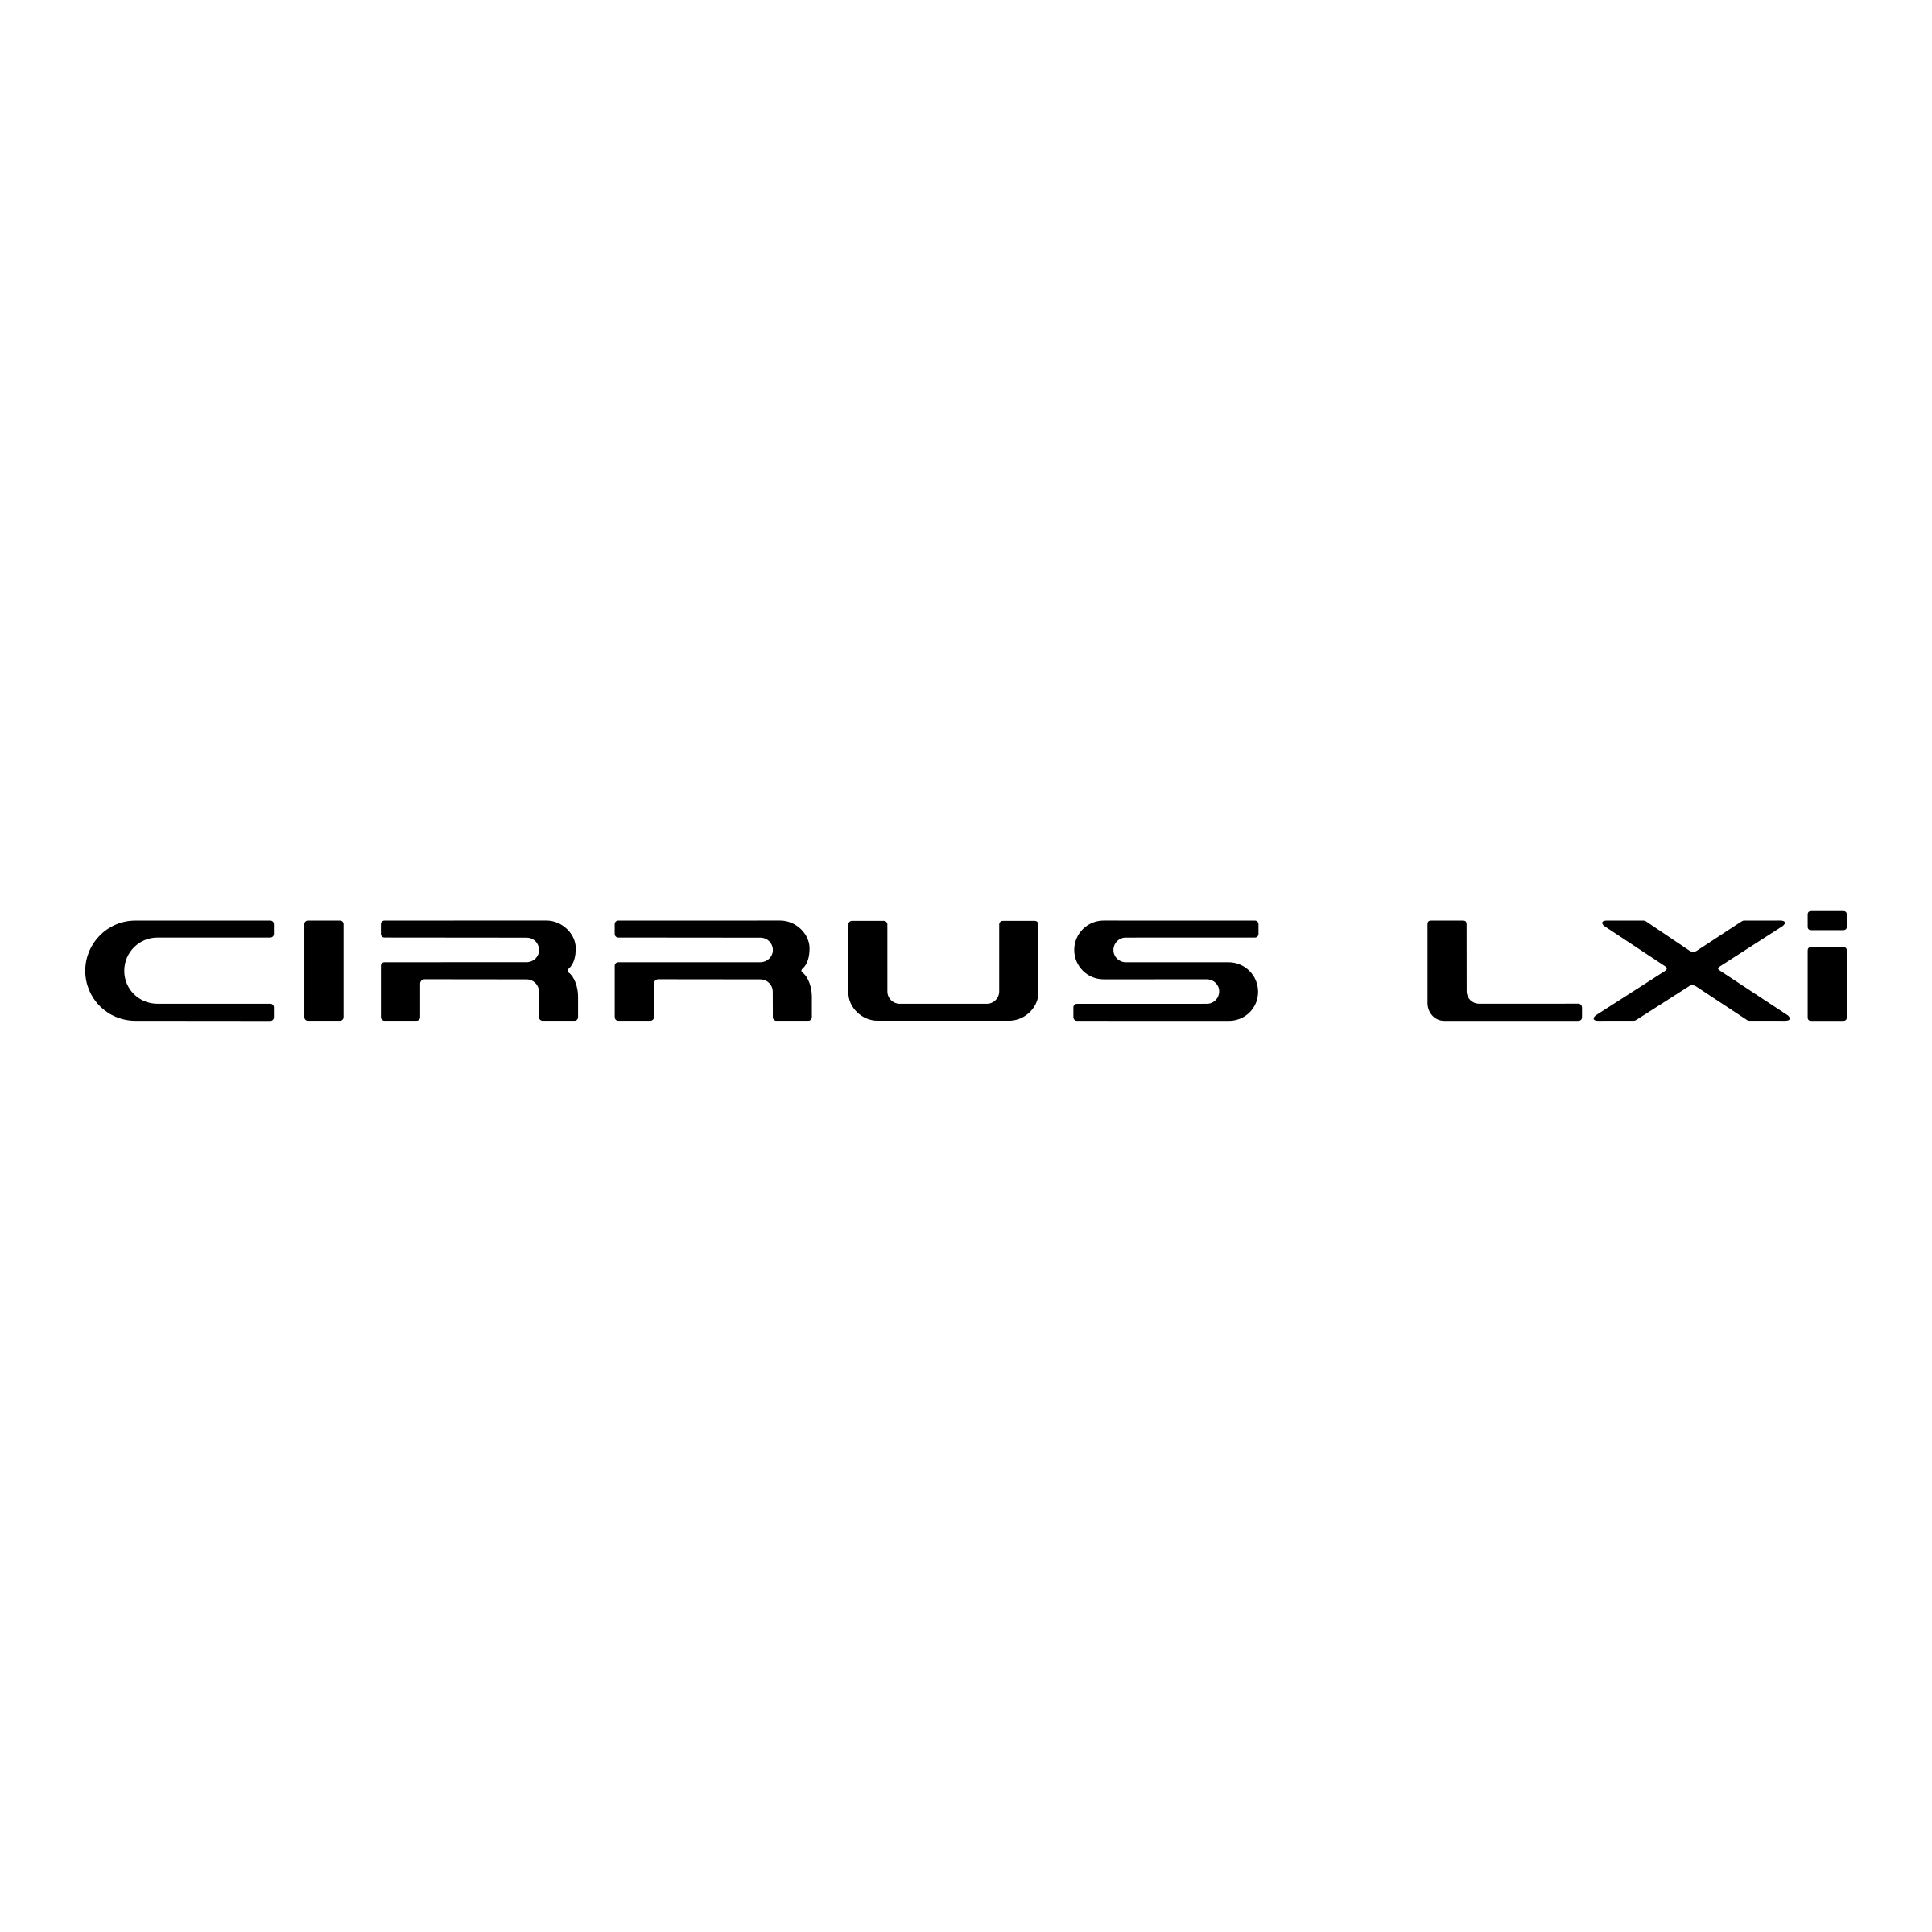 LXI Logo - Cirrus LXi Logo PNG Transparent & SVG Vector - Freebie Supply